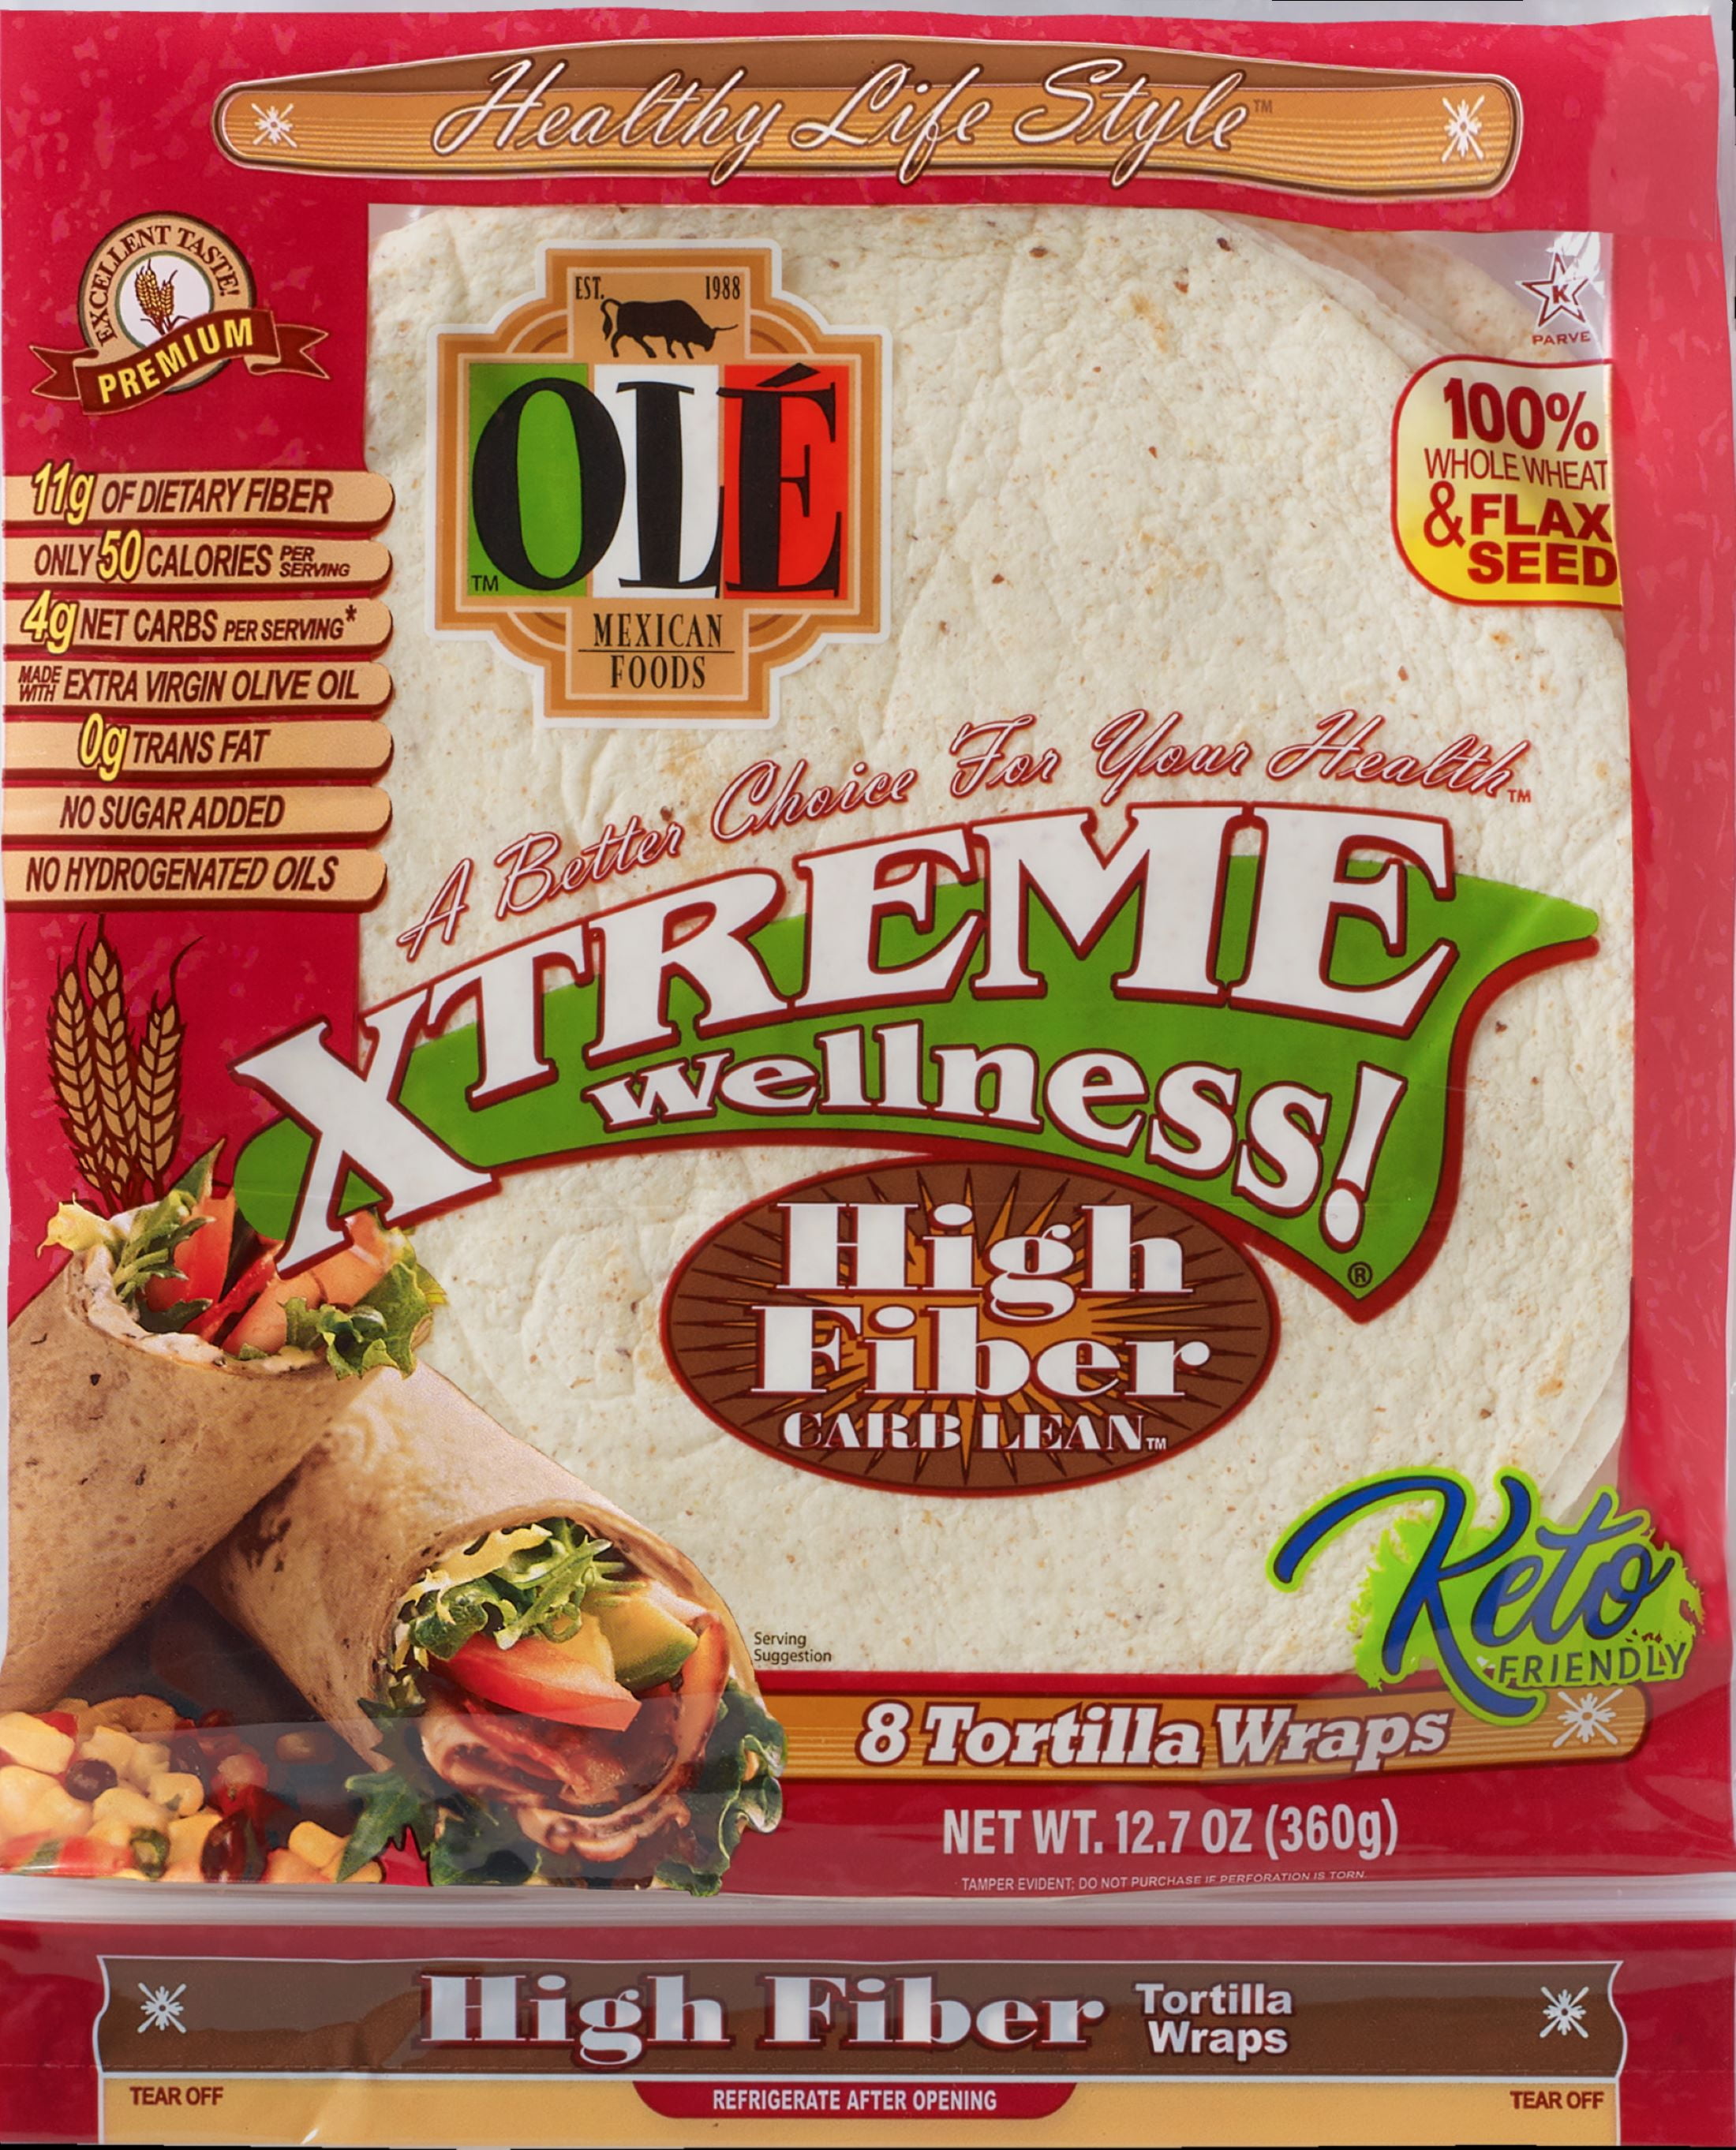 Olé Mexican Foods Xtreme Wellness! High Fiber Carb Lean Tortilla Wraps, 8 Count, 12.7 Oz - Walmart.com